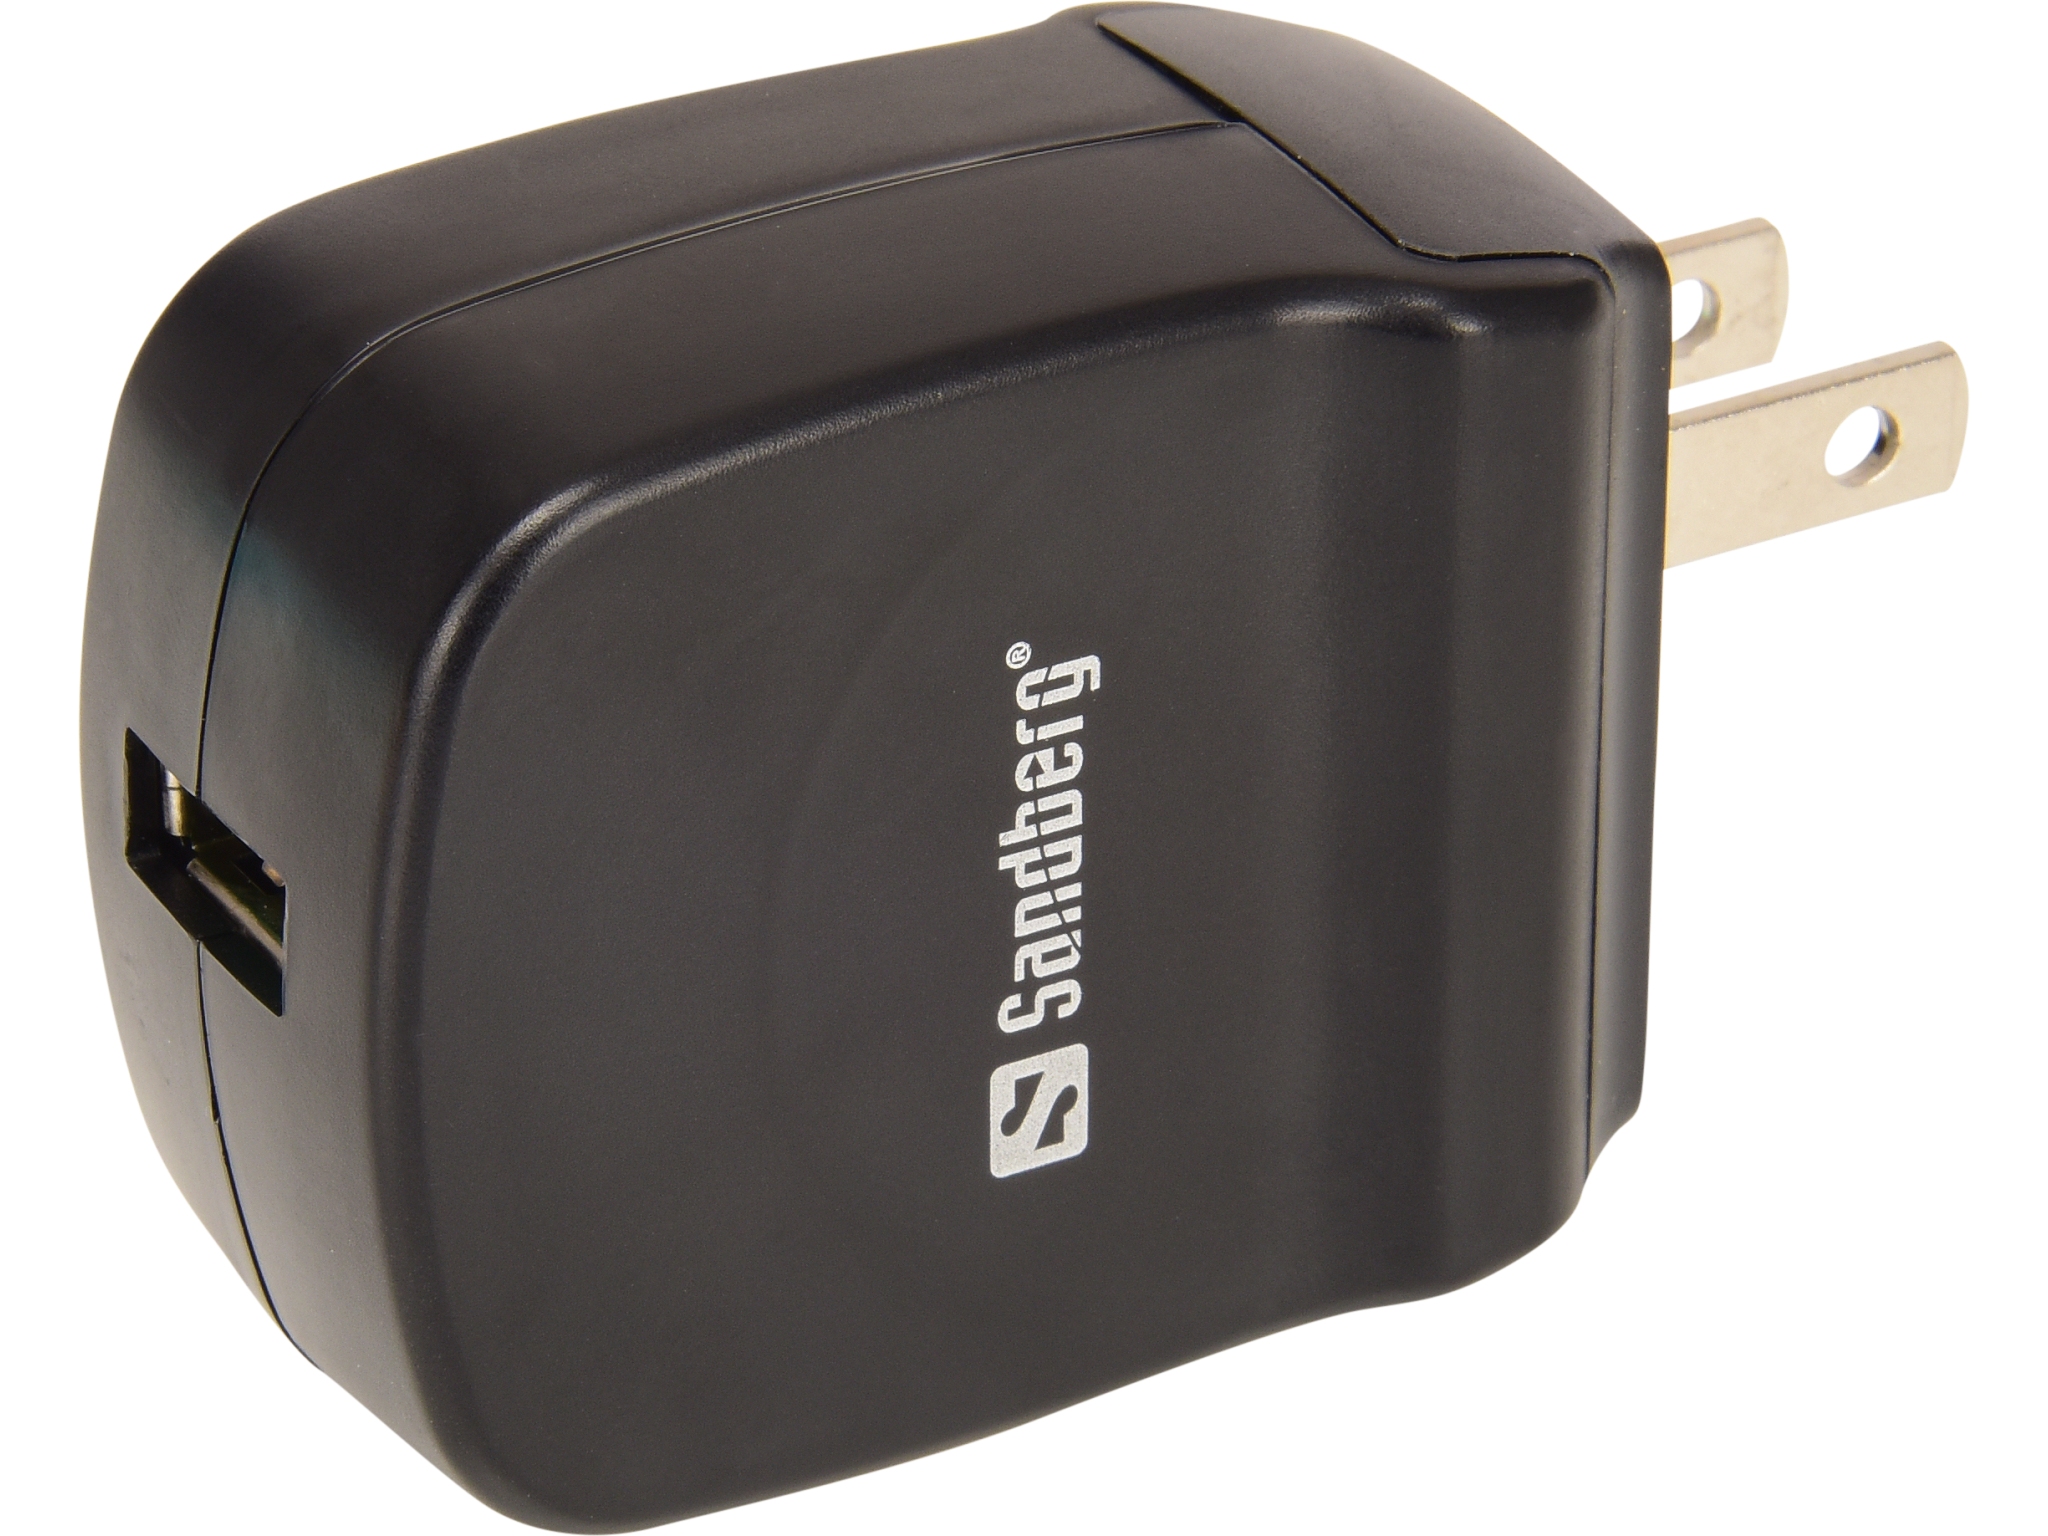 USB Lade-Adapter für 1 USB-Gerät, Quick Charger 3.0